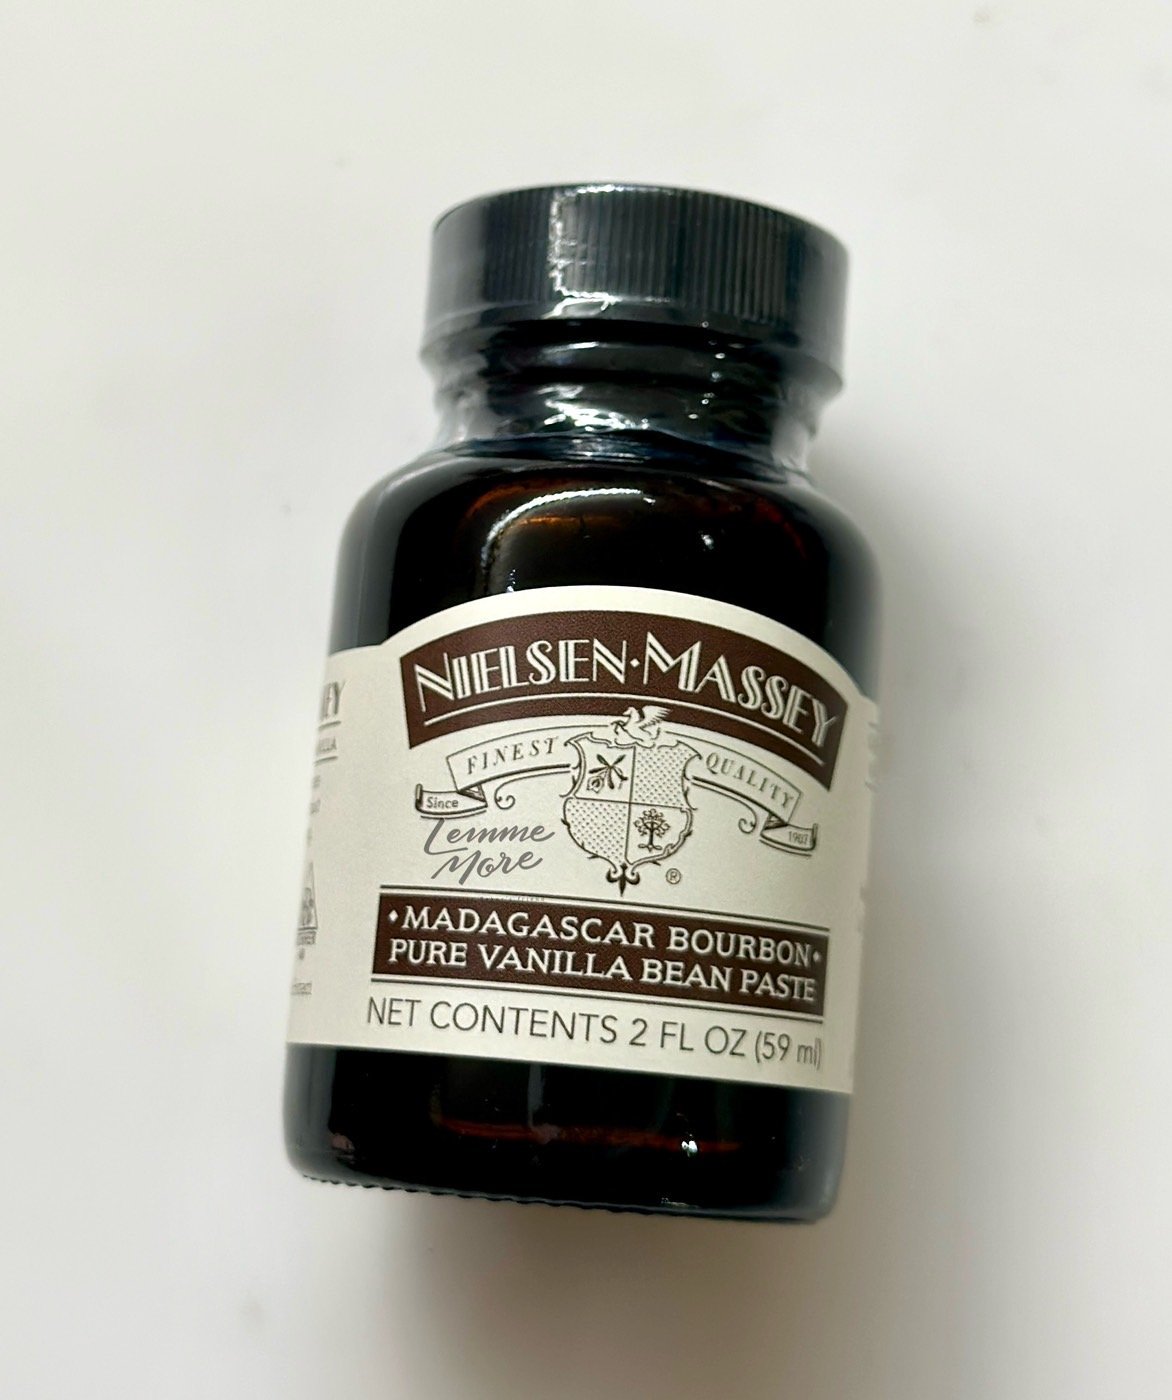 Nielsen-Massey Madagascar Bourbon Pure Vanilla Bean Paste 2oz. (59ml.)